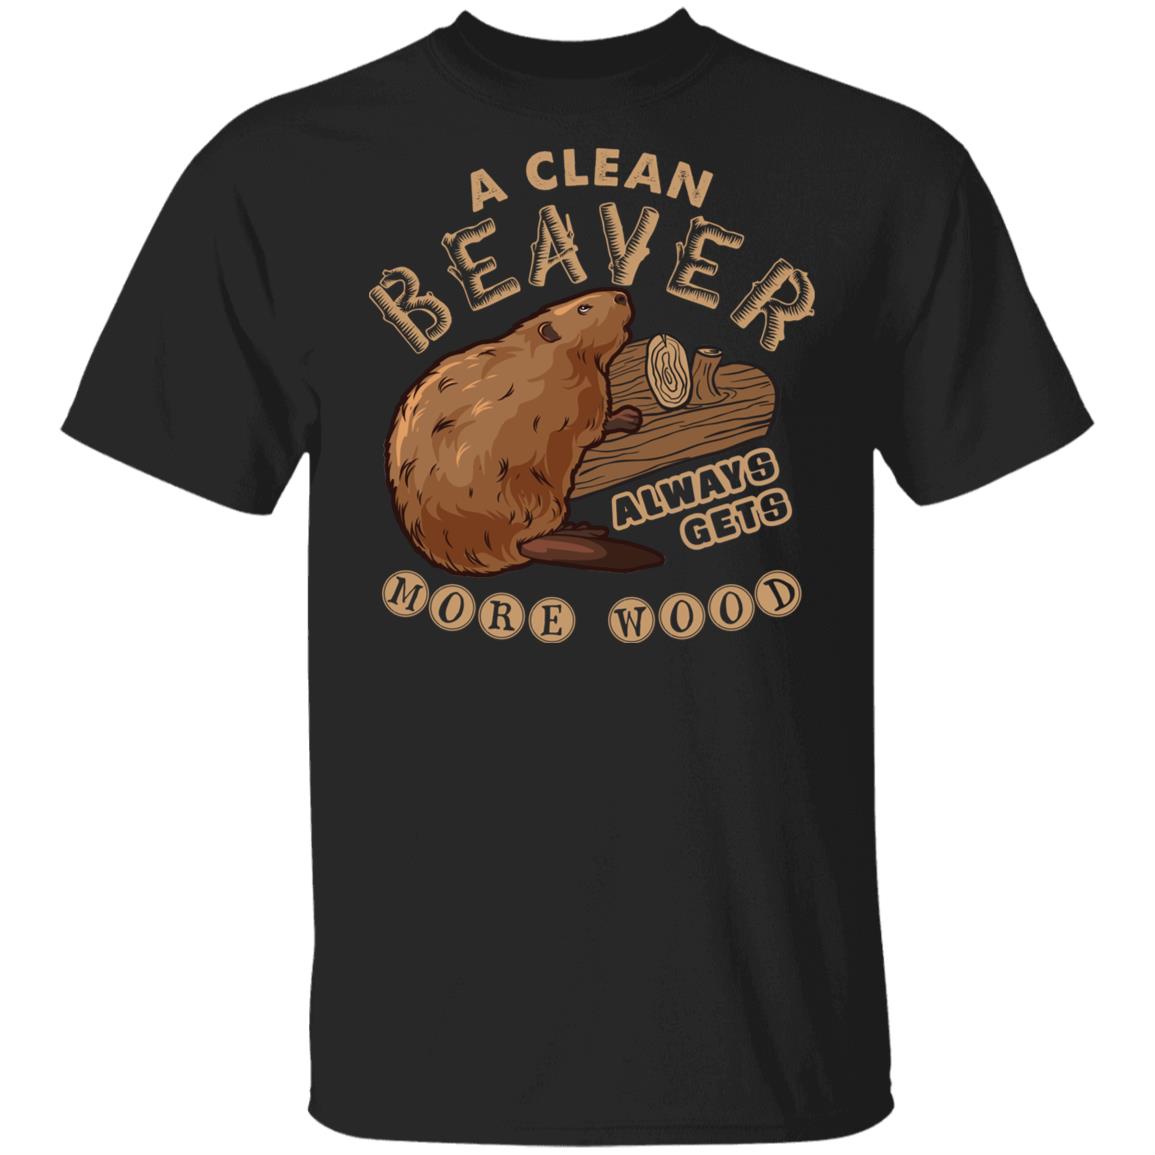 Clean Beaver Cotton Tee – The Dude's Threads